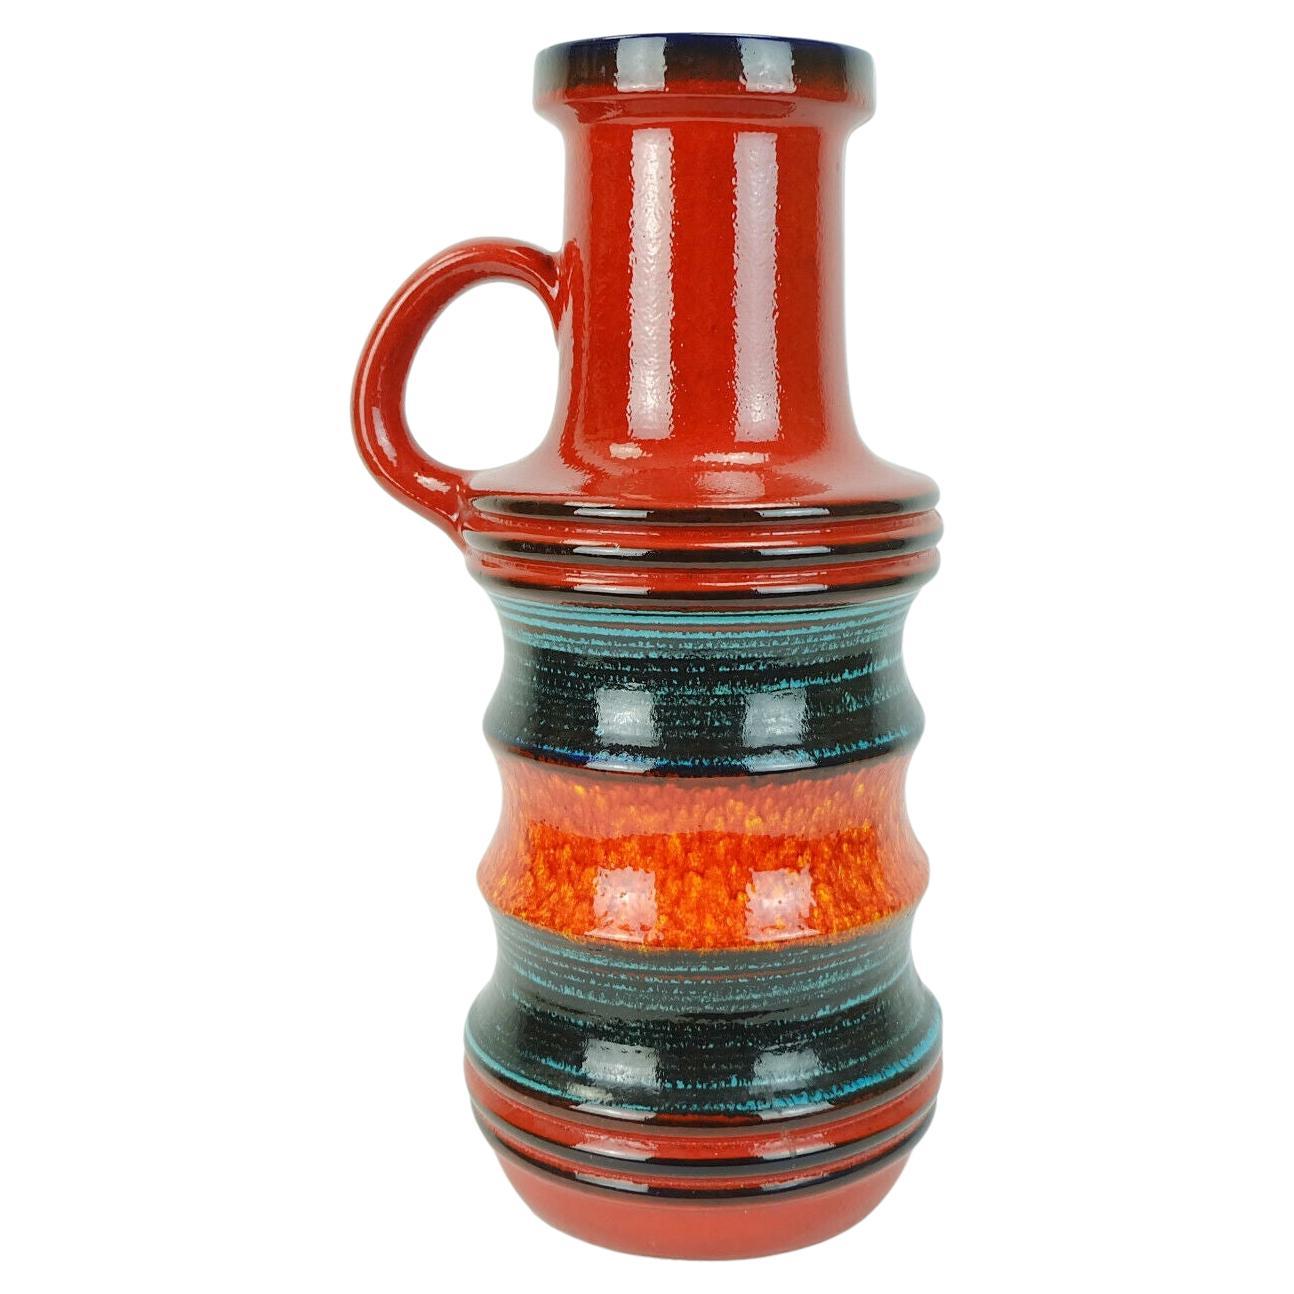 grand vase scheurich en ceramique modele 427-47 motif stripe rouge orange noir en vente